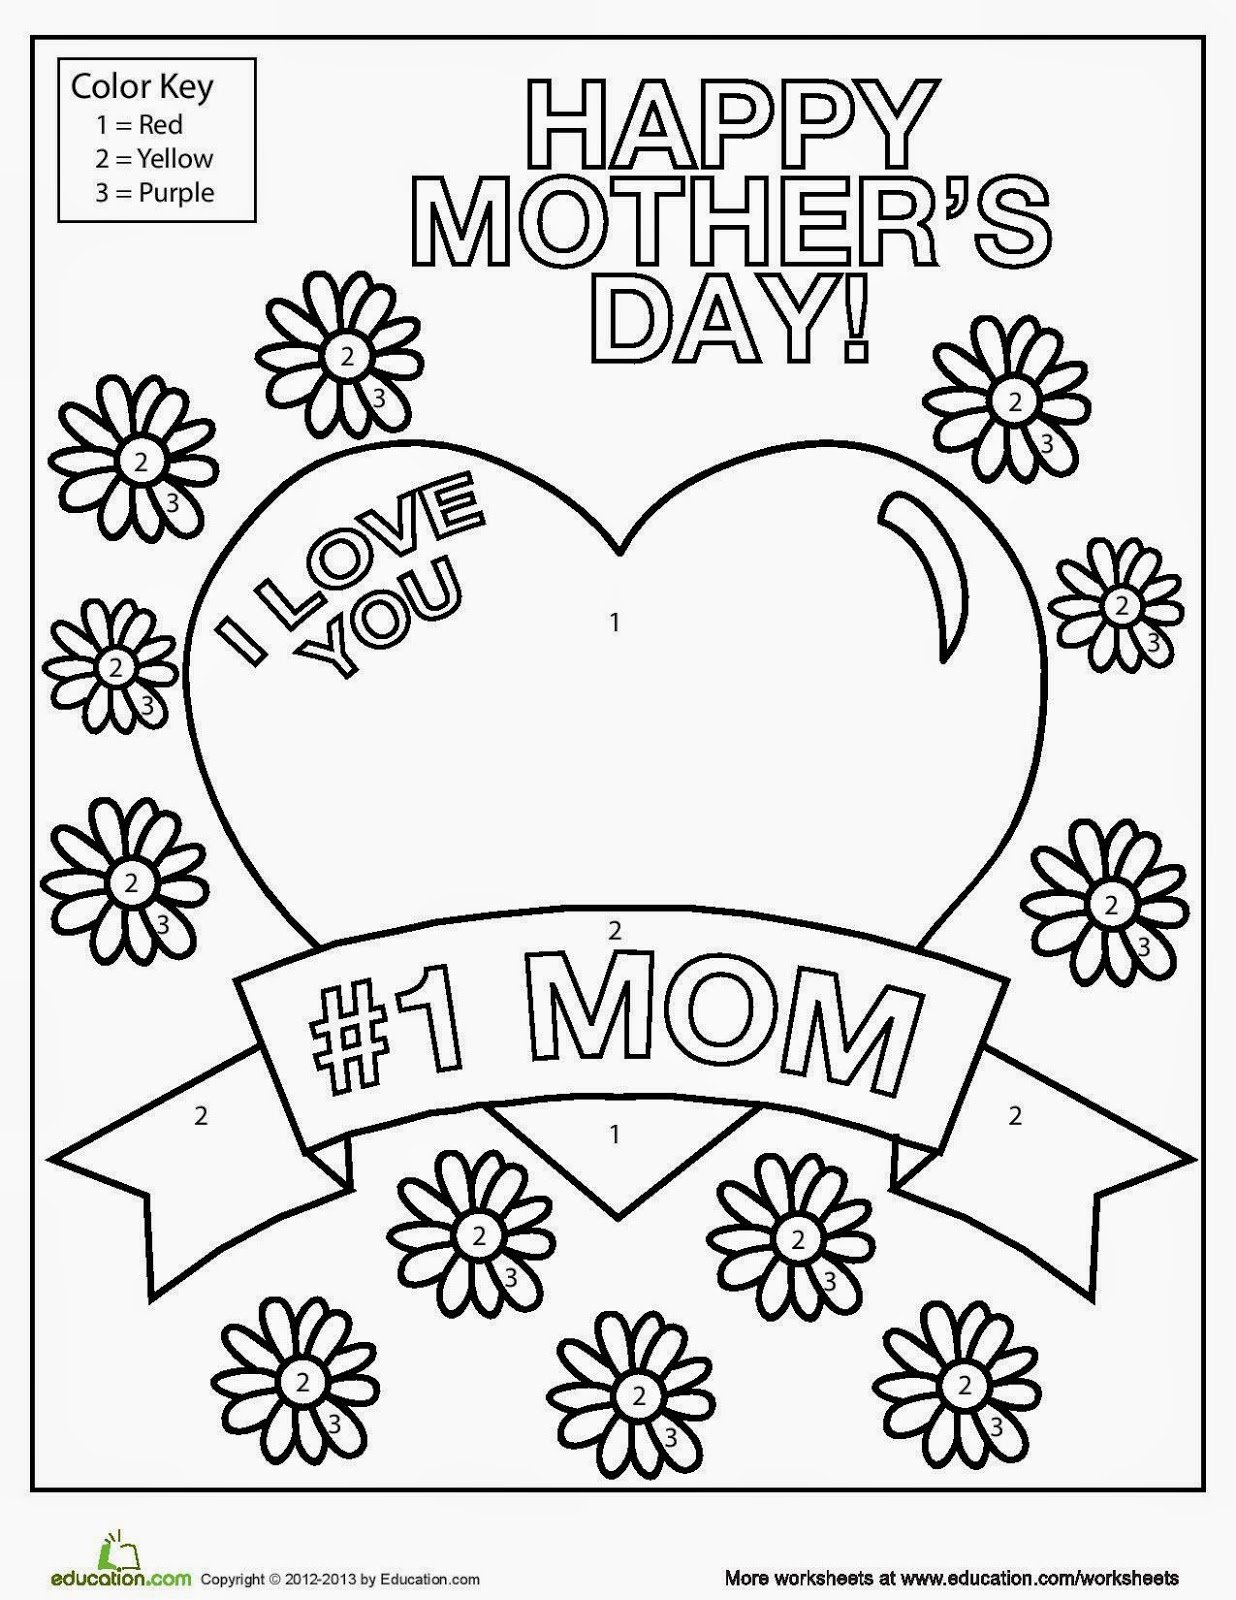 8 march worksheets for kids. Открытка для мамы раскраска. Раскраска ко Дню матери. Открытка ко Дню матери раскраска. Раскраска для мамы на день матери.